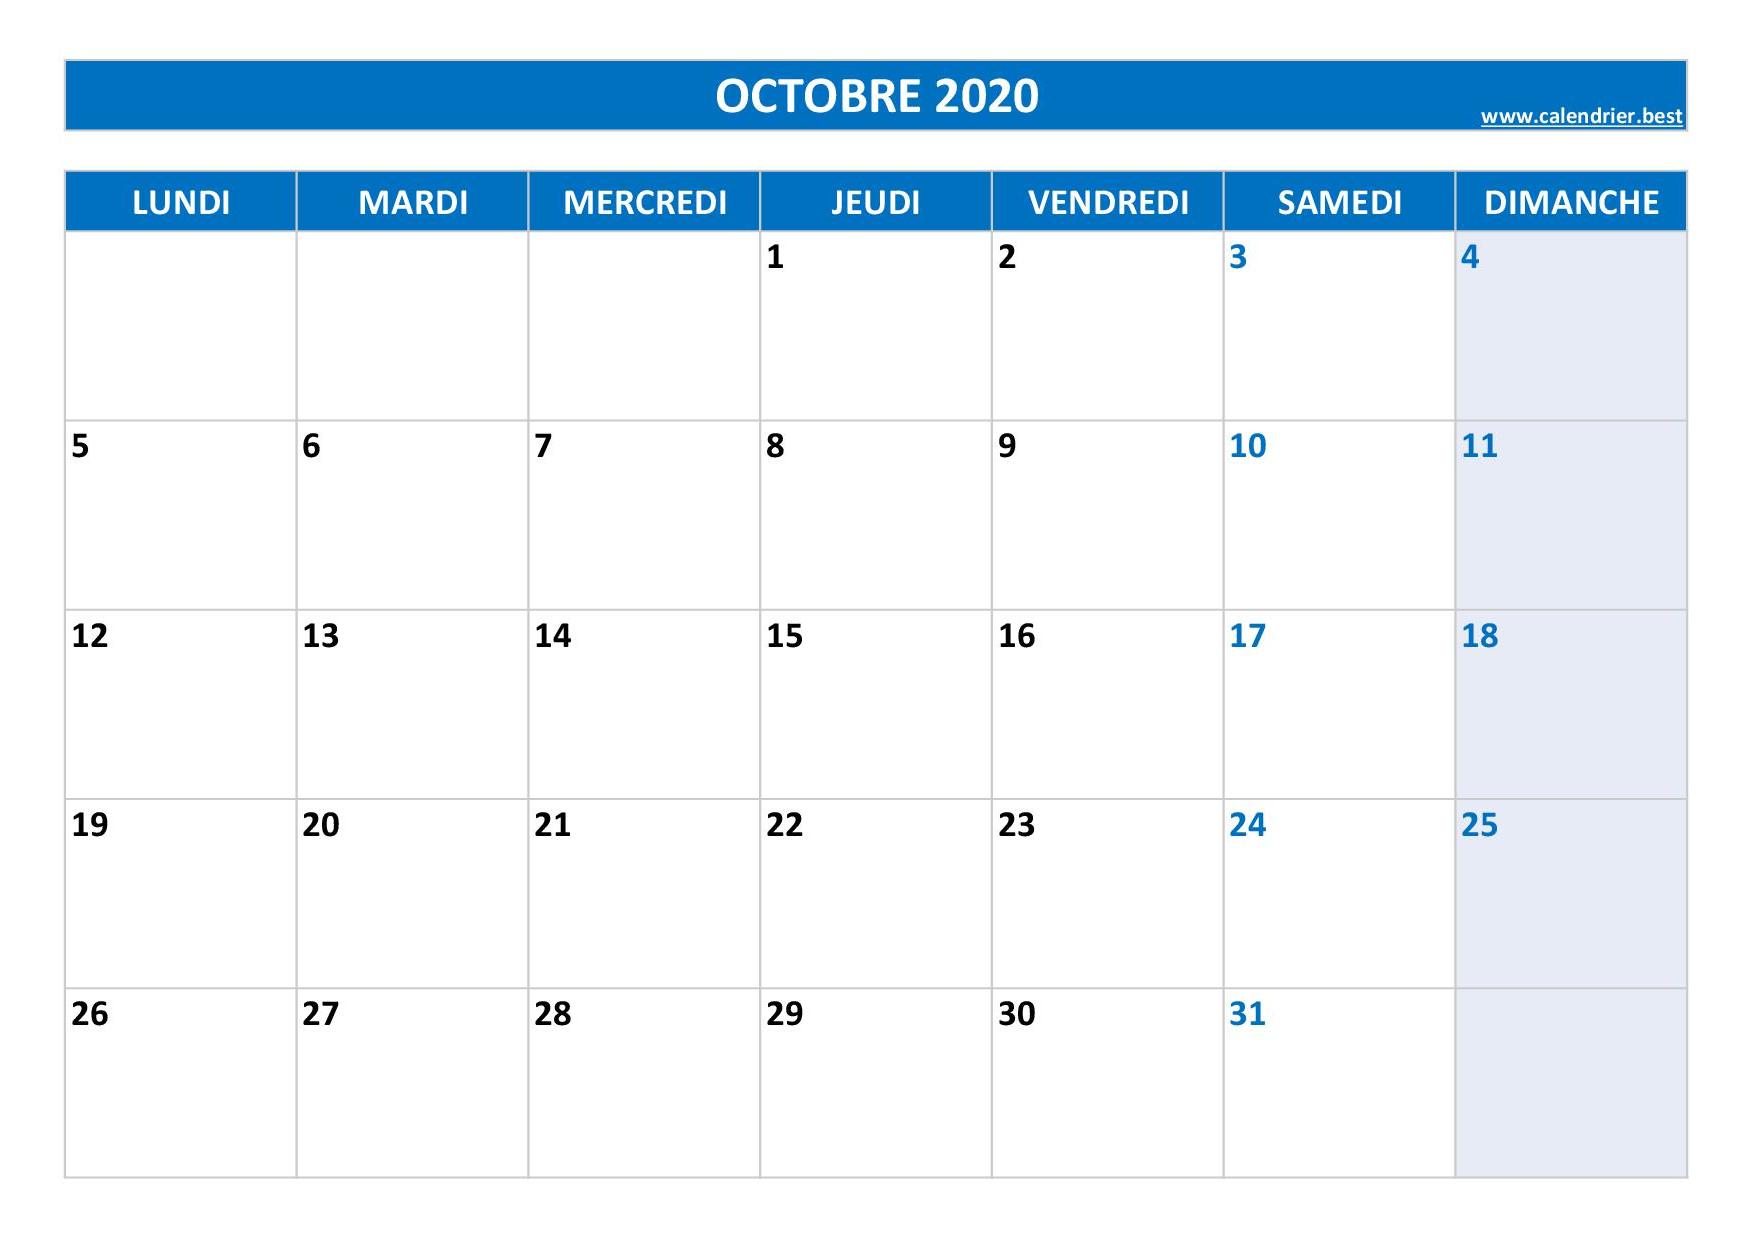 Calendrier Octobre 2020 à consulter ou imprimer -Calendrier.best